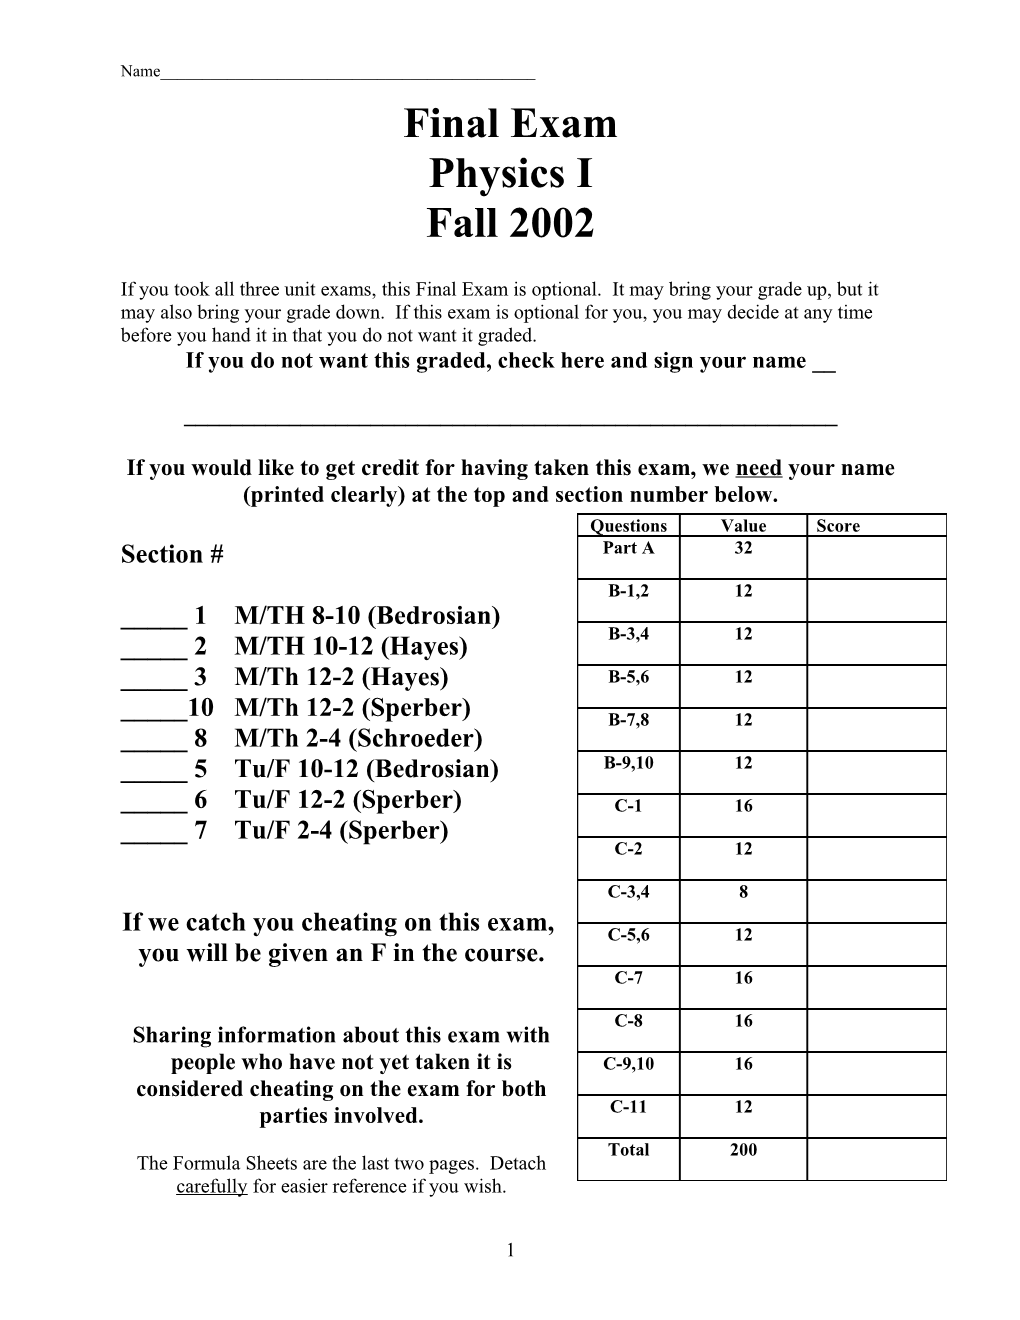 Final Exam, Physics 1, Fall 2002